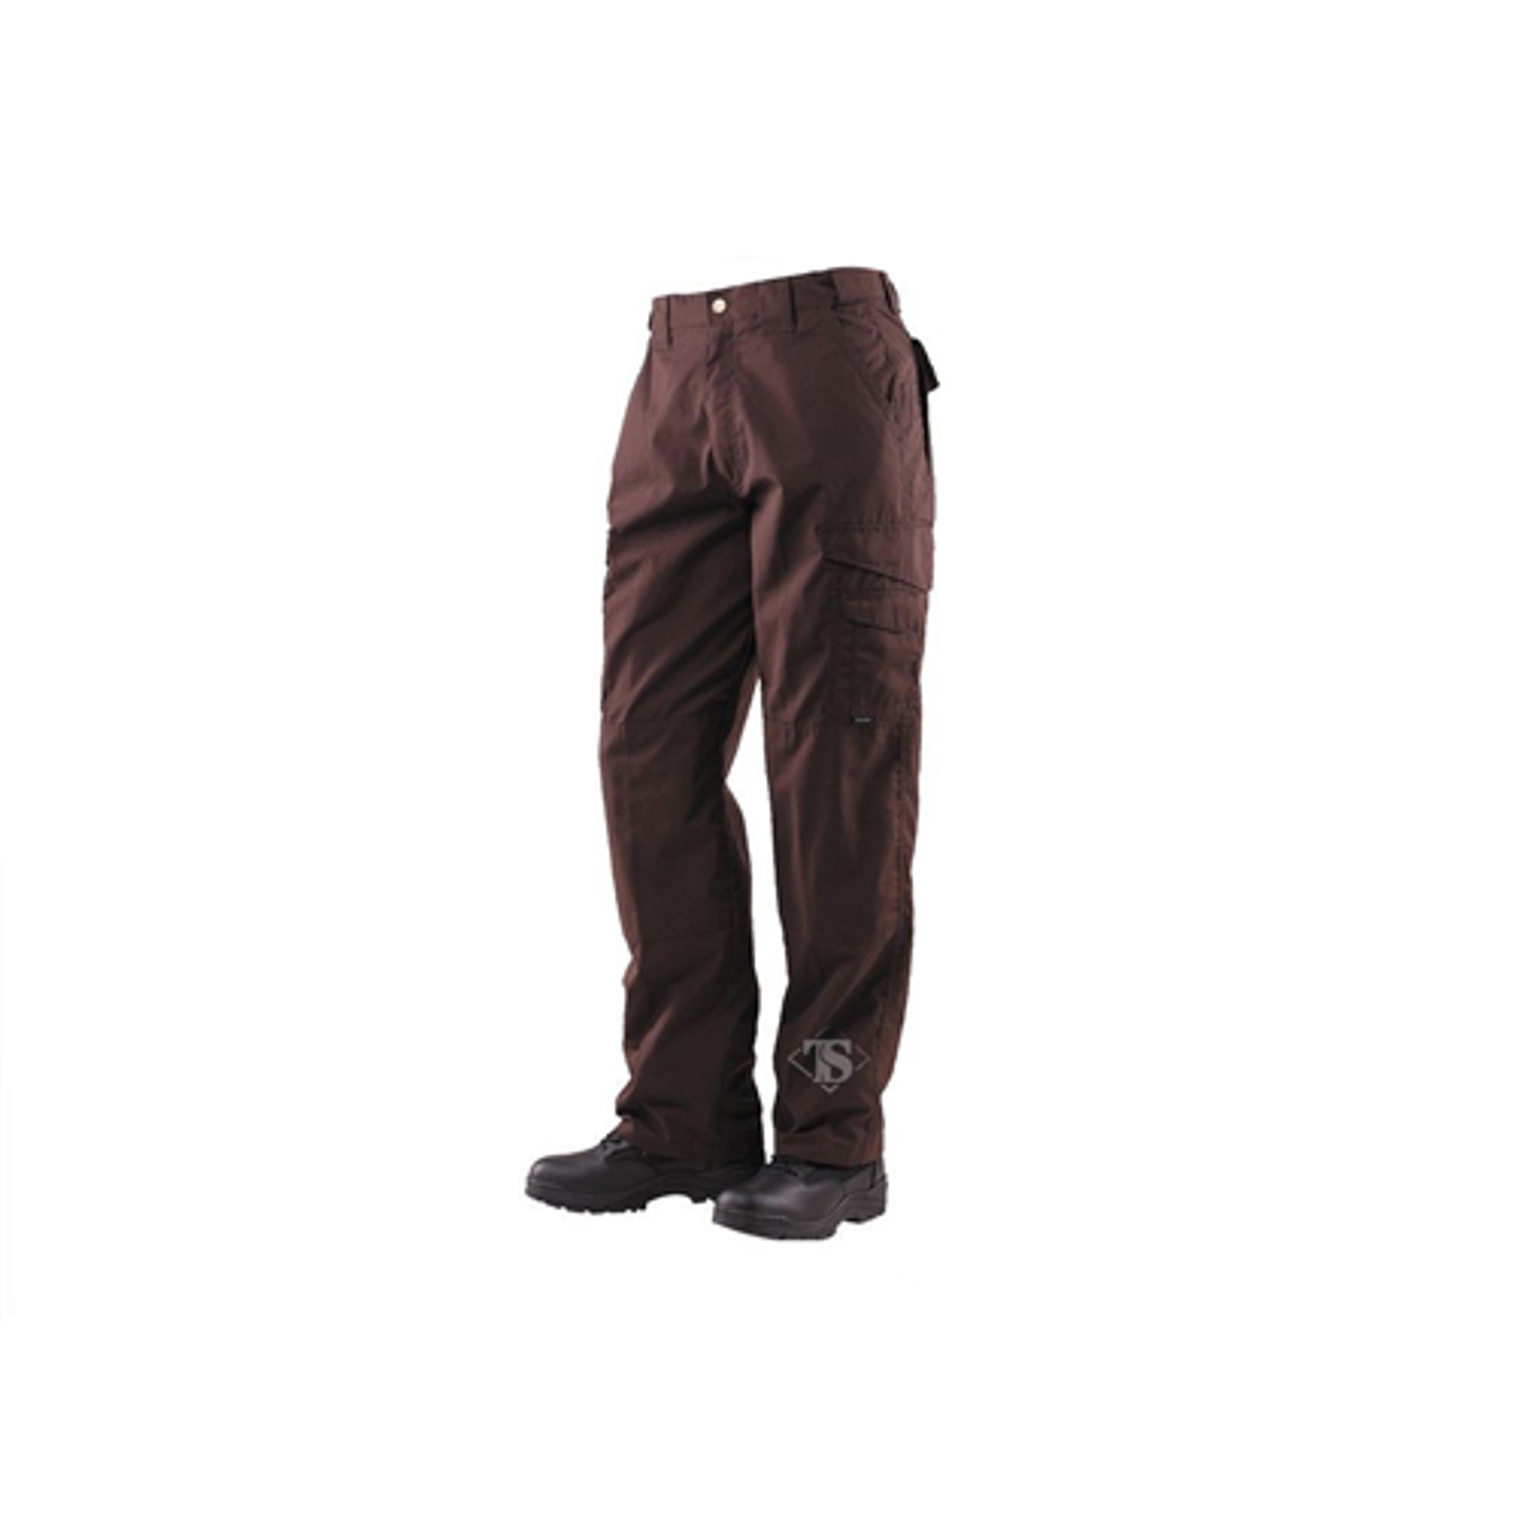 24-7 Original Tactical Pants - 6.5oz - Brown - KRTSP-1065086